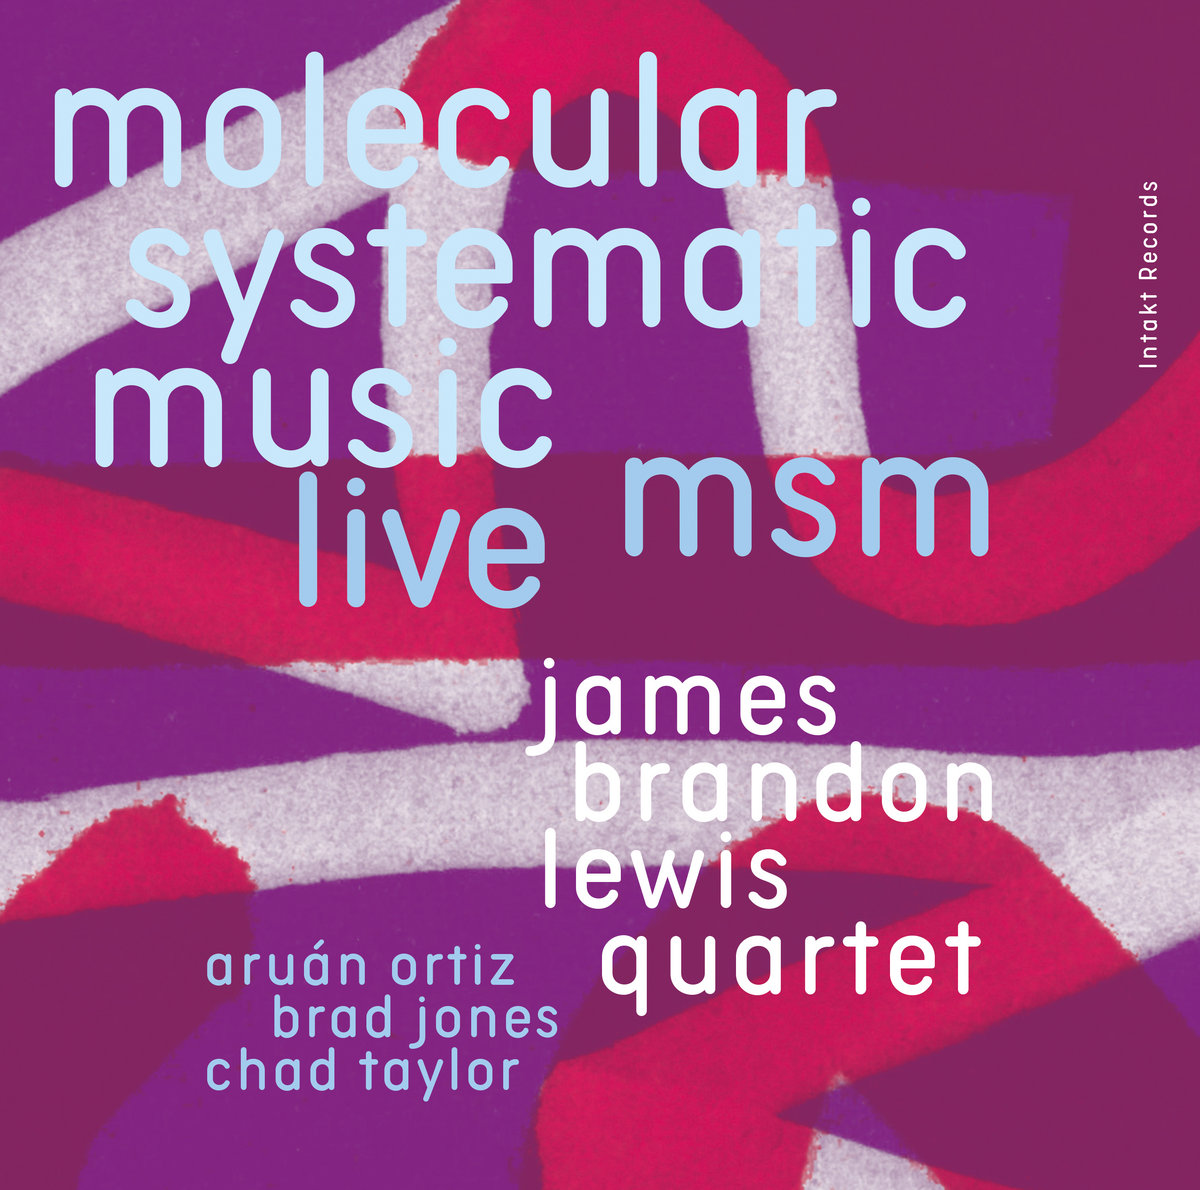 James Brandon Lewis Quartet – Molecular Systematic Music Live